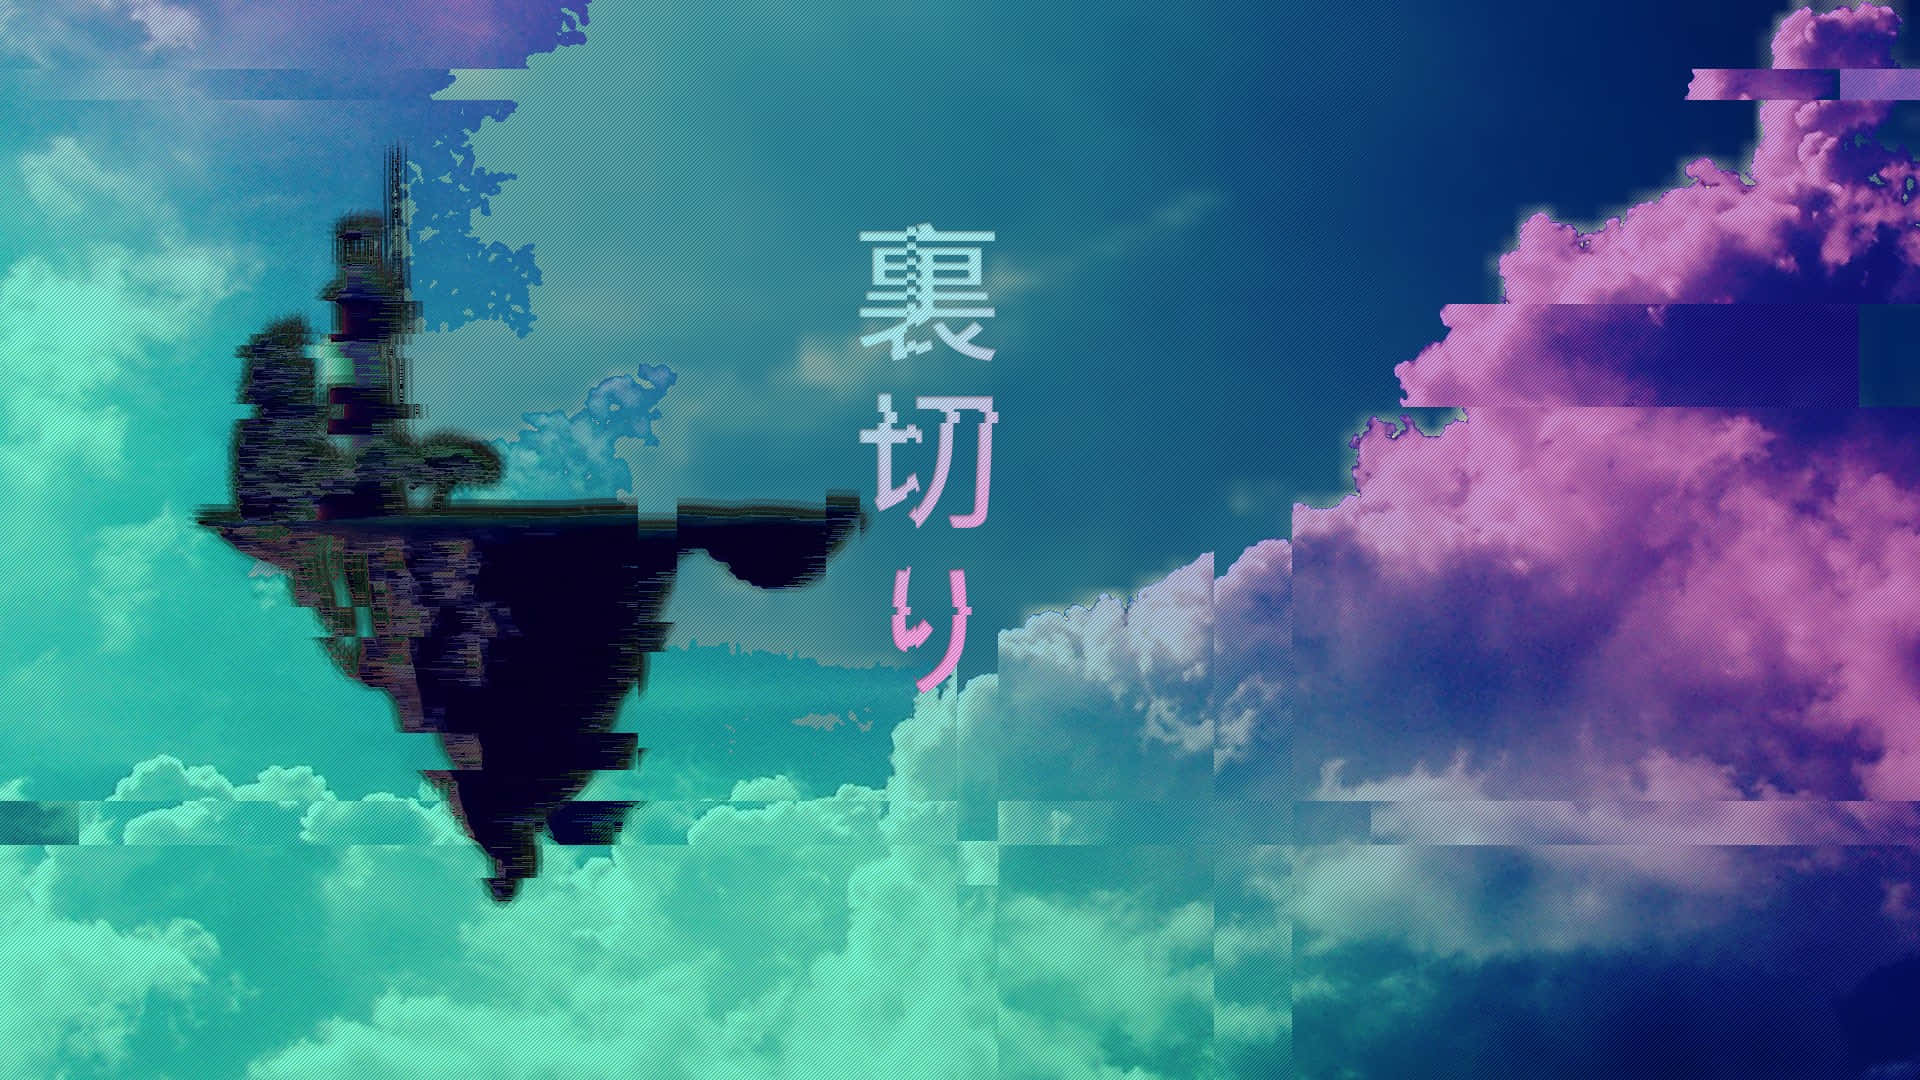 Japanese Glitch Vaporwave Background Illustration